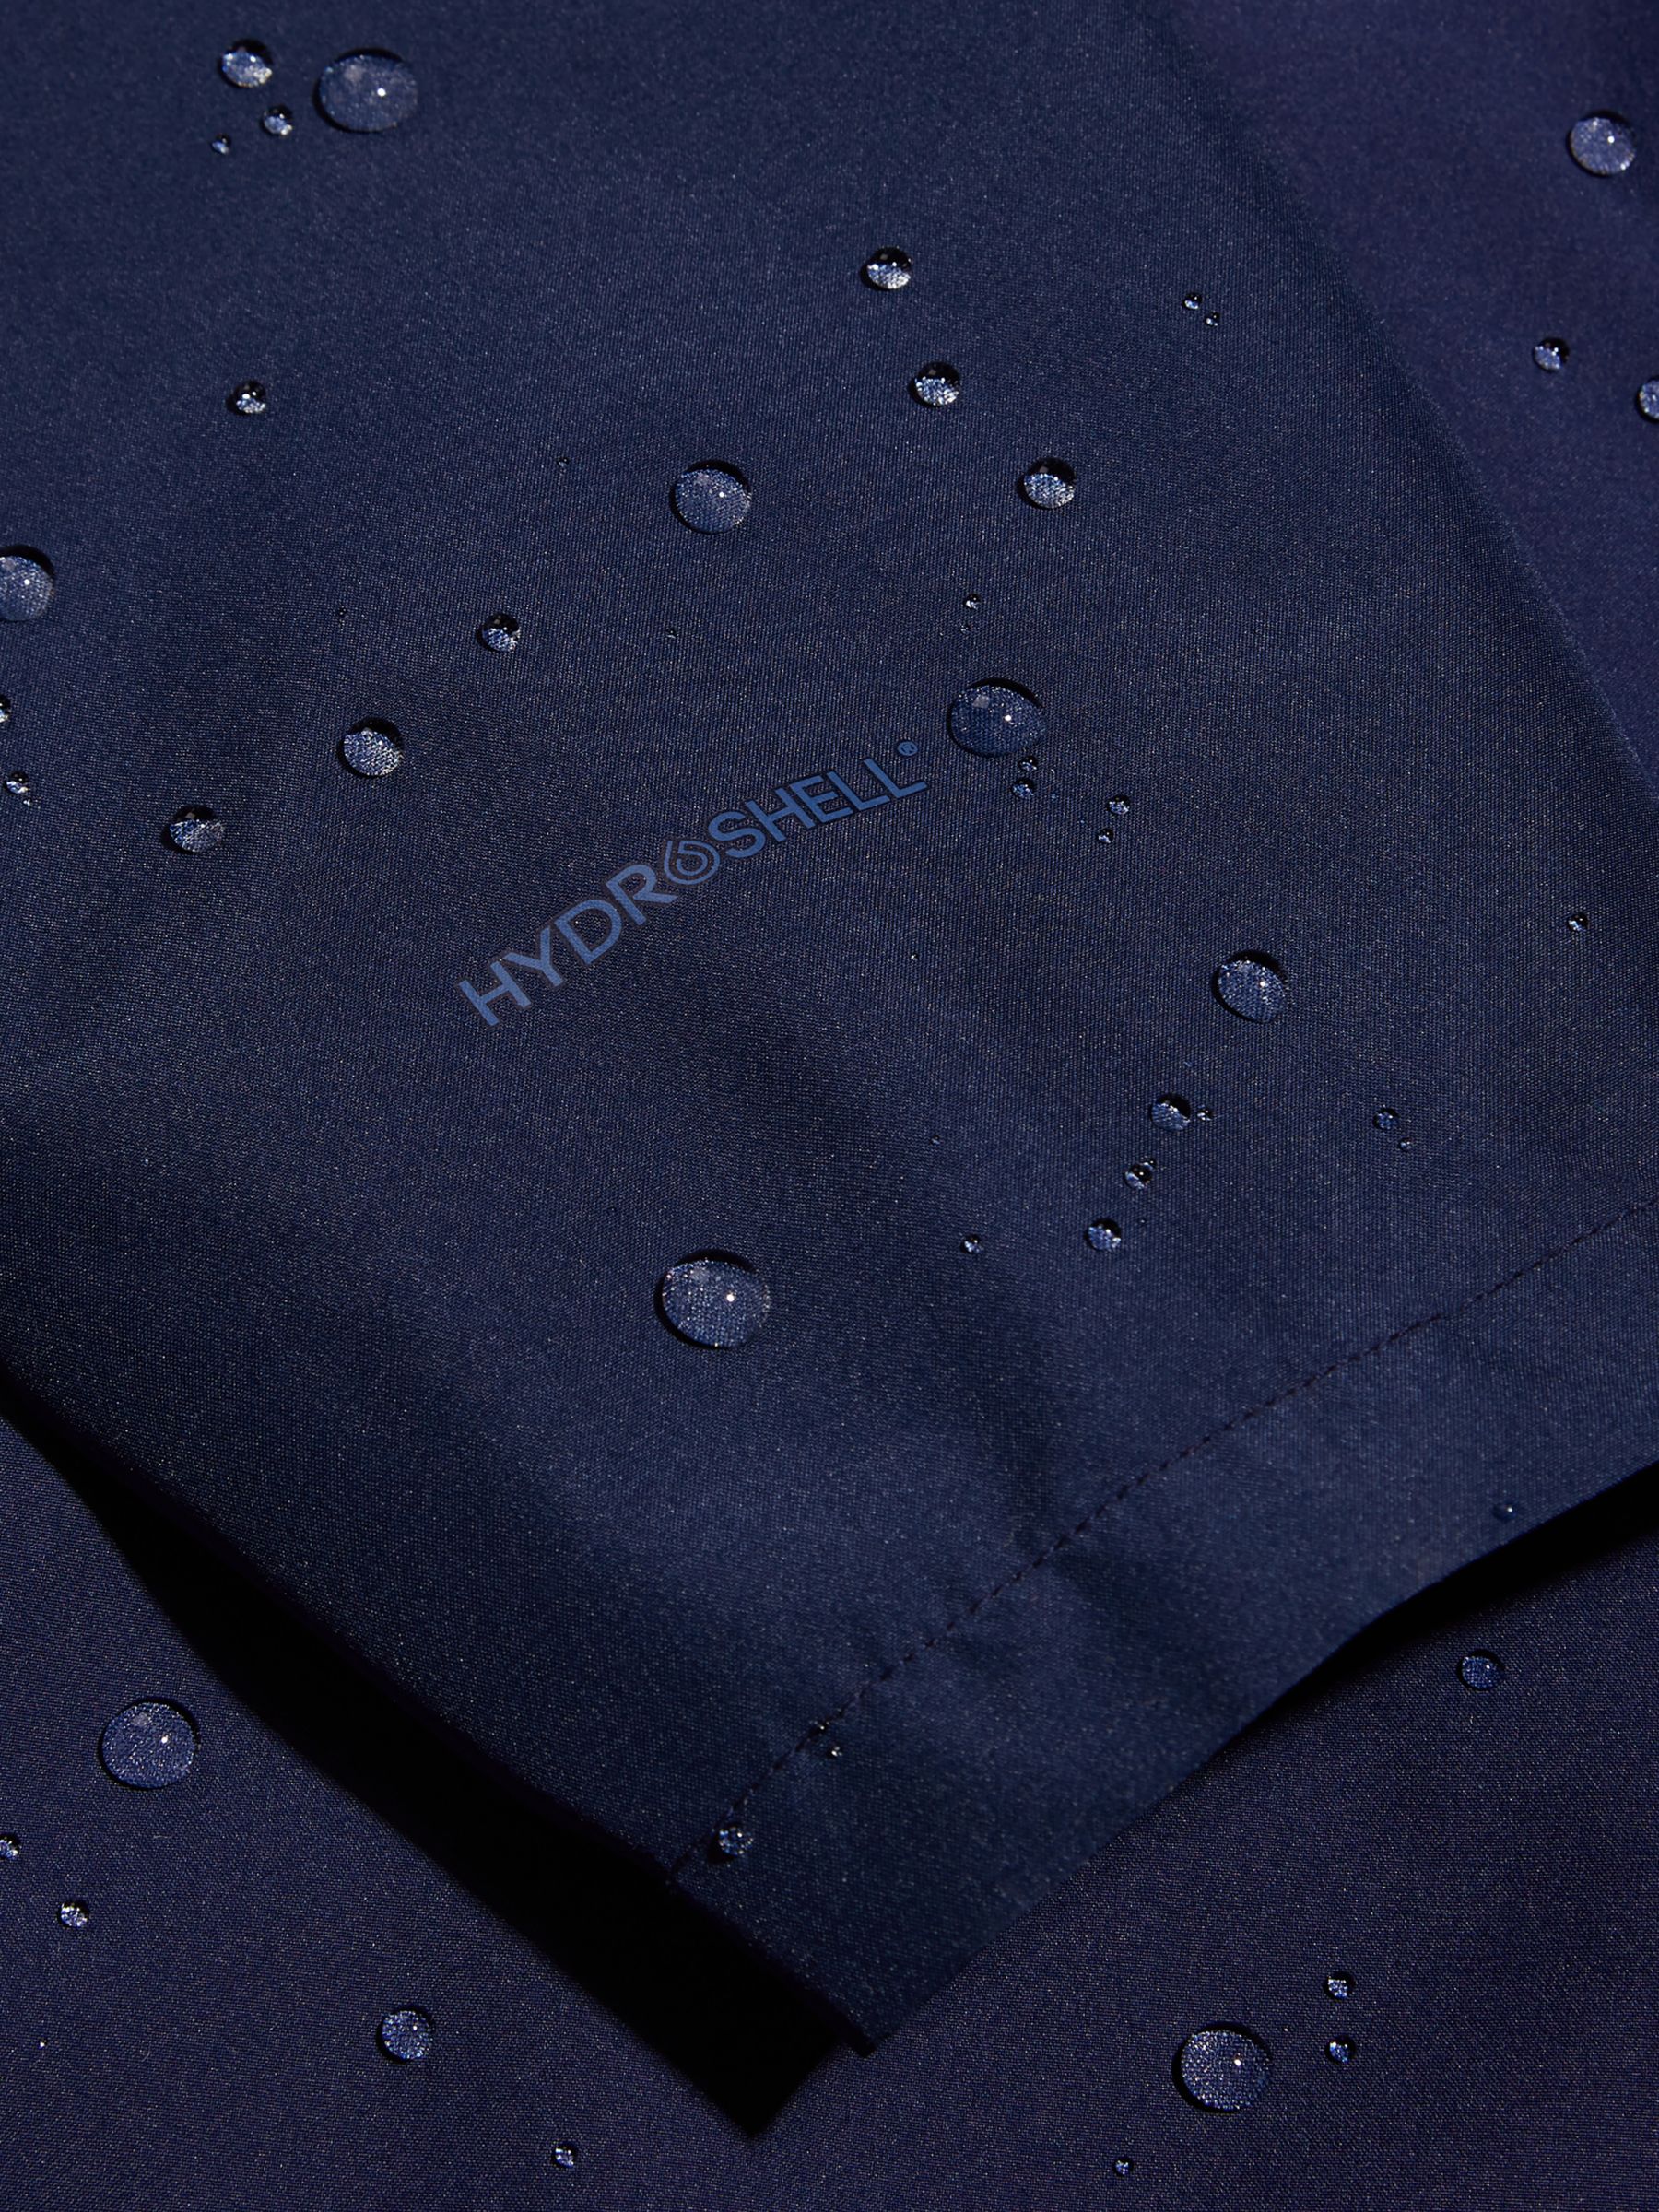 Berghaus Deluge Pro 3.0 Men's Waterproof Jacket, Navy, M